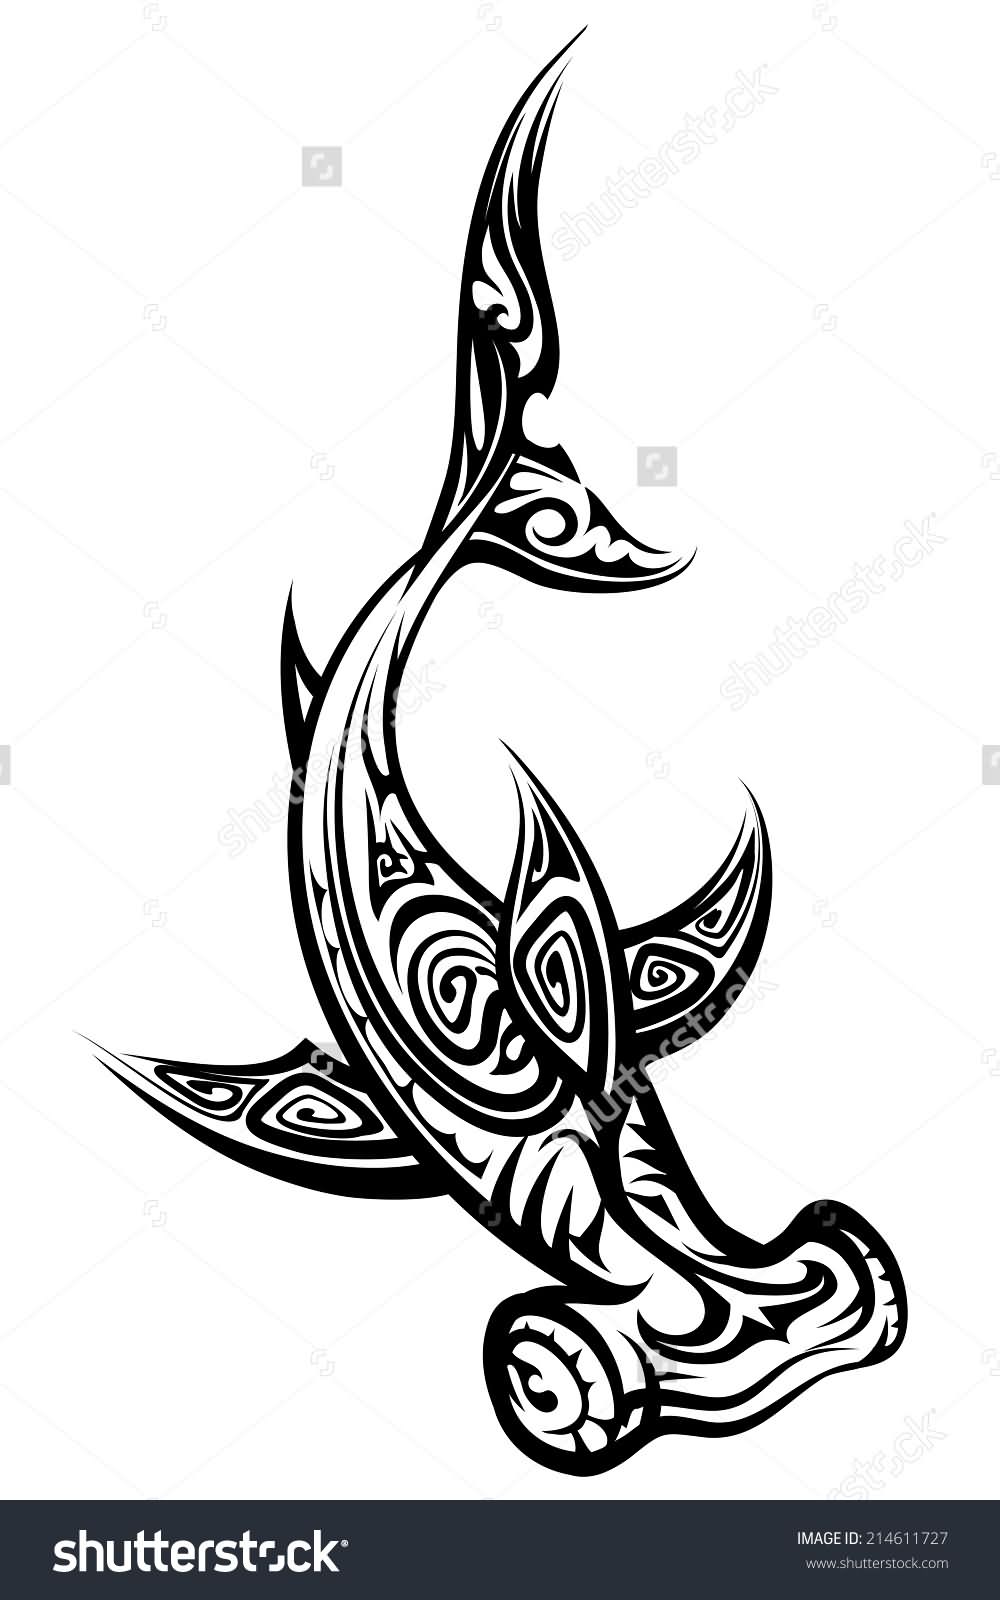 Unique Black Hammerhead Shark Tattoo Design